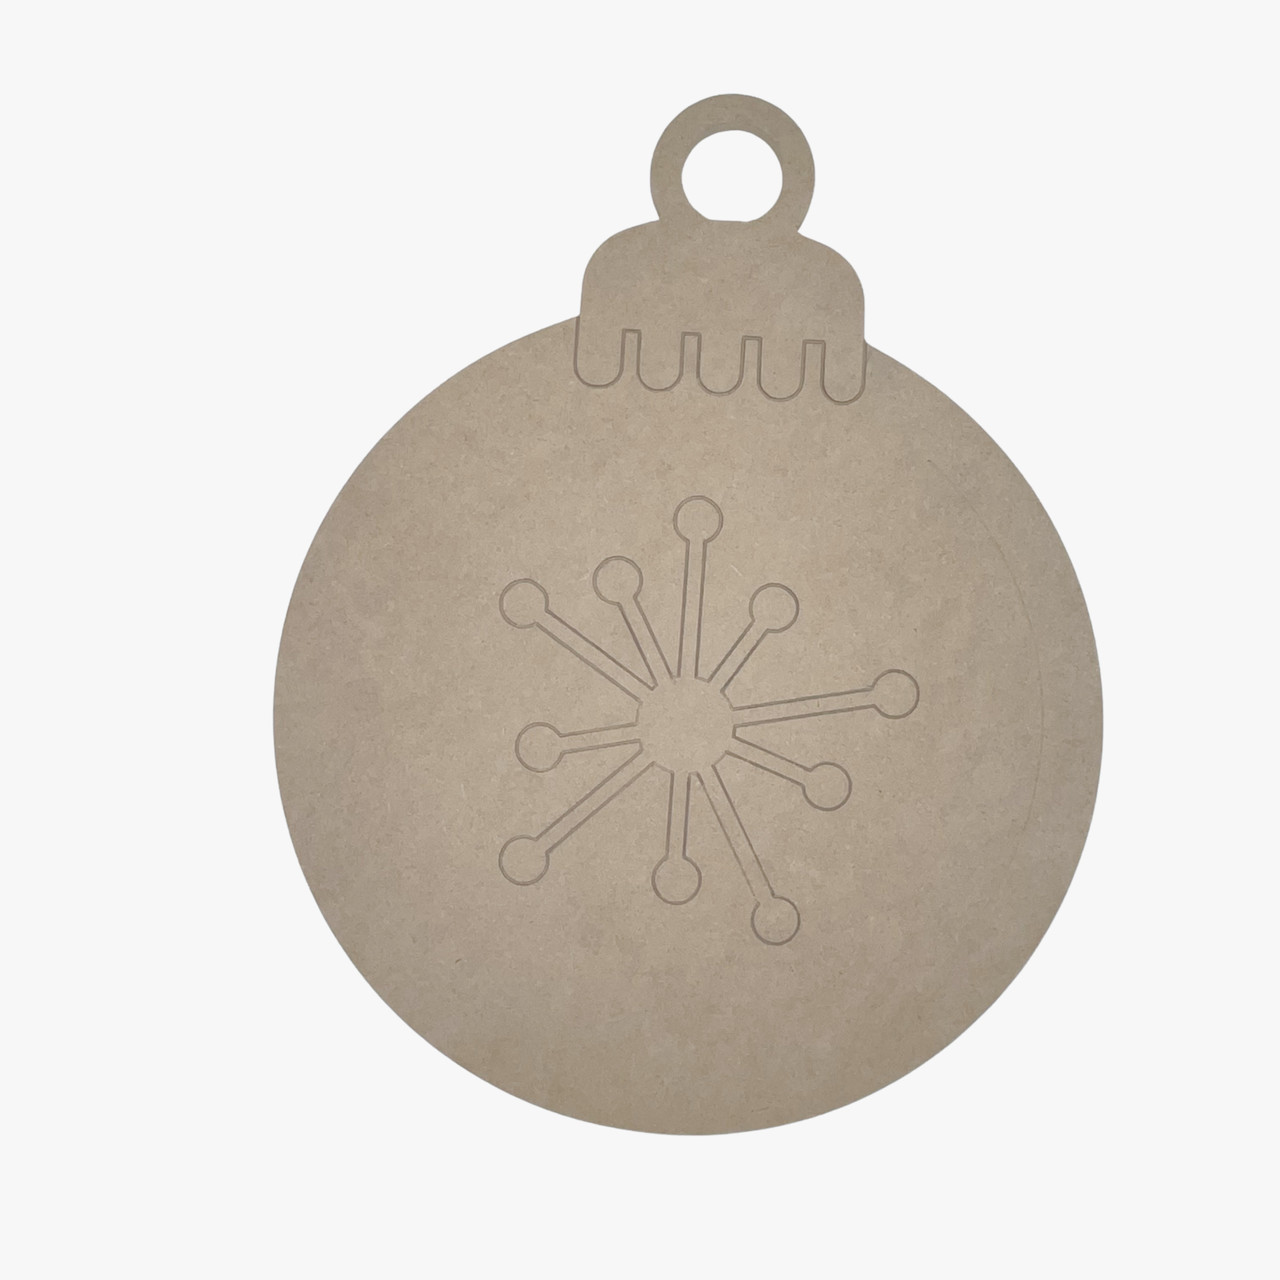 Small round snowflake ornament